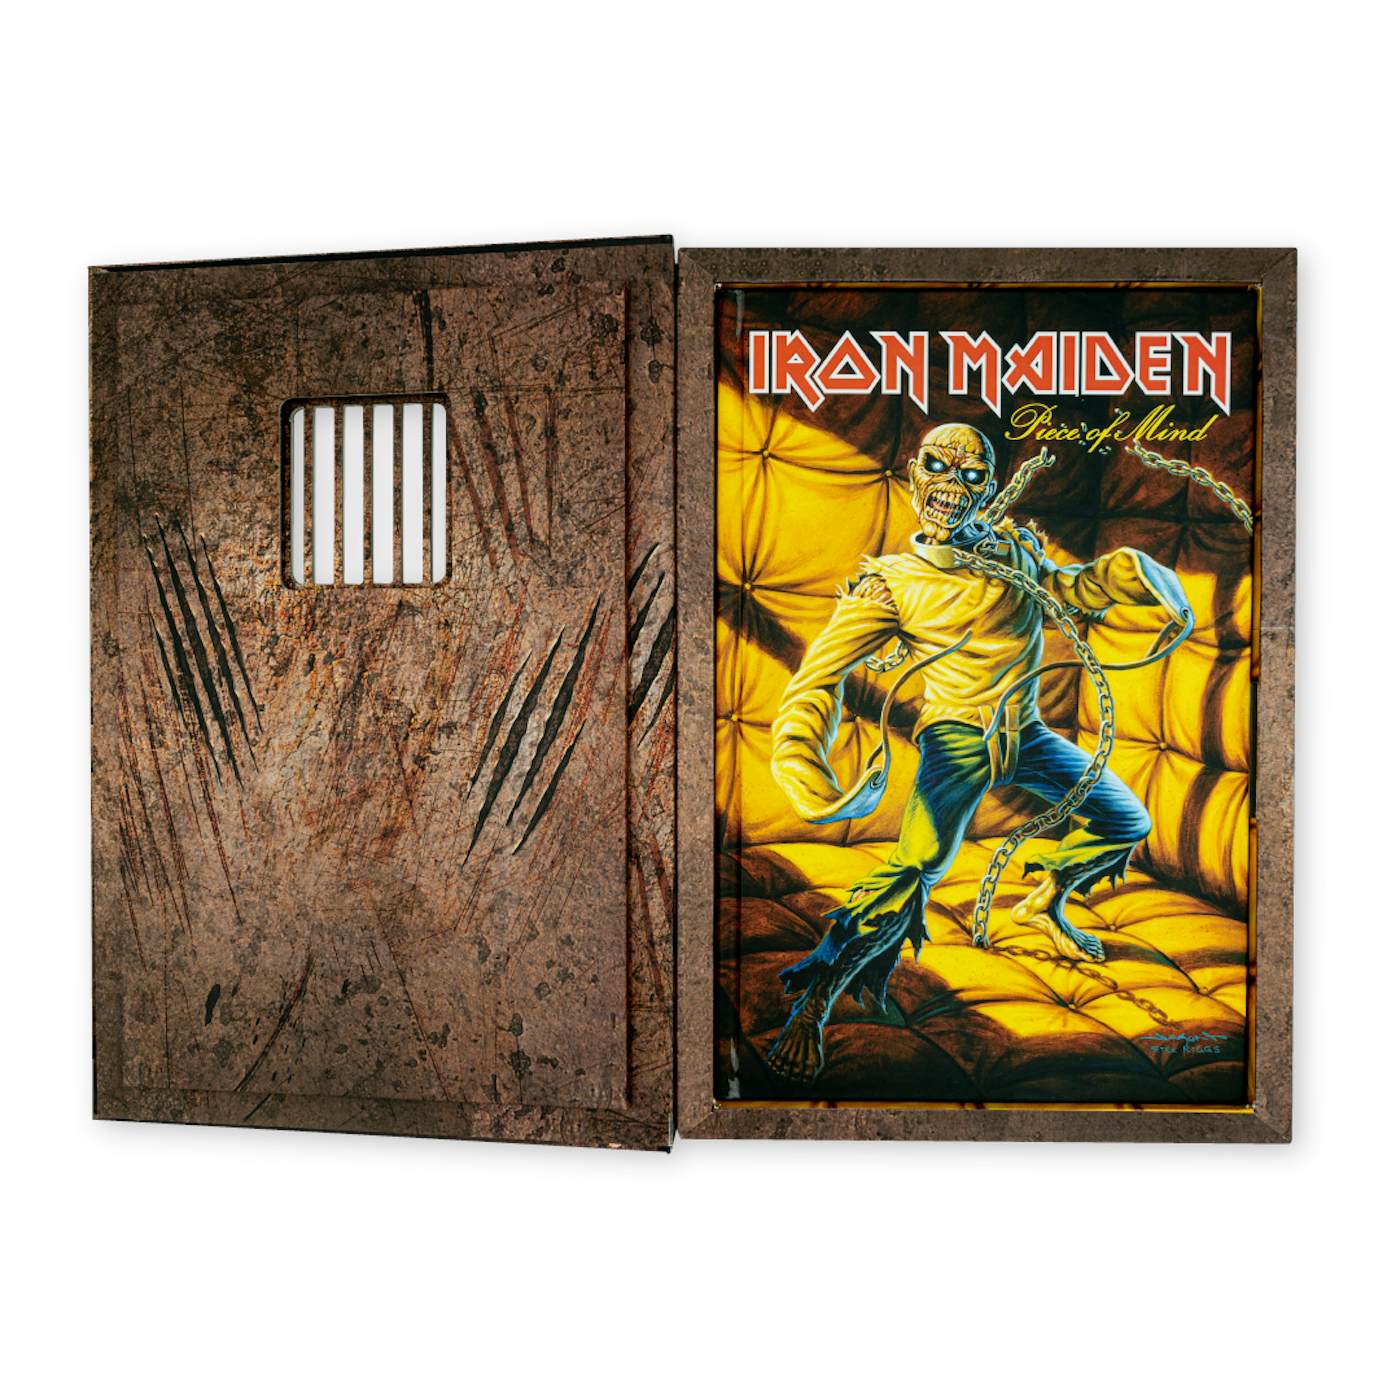 Iron Maiden Metal Vinyl Records for sale